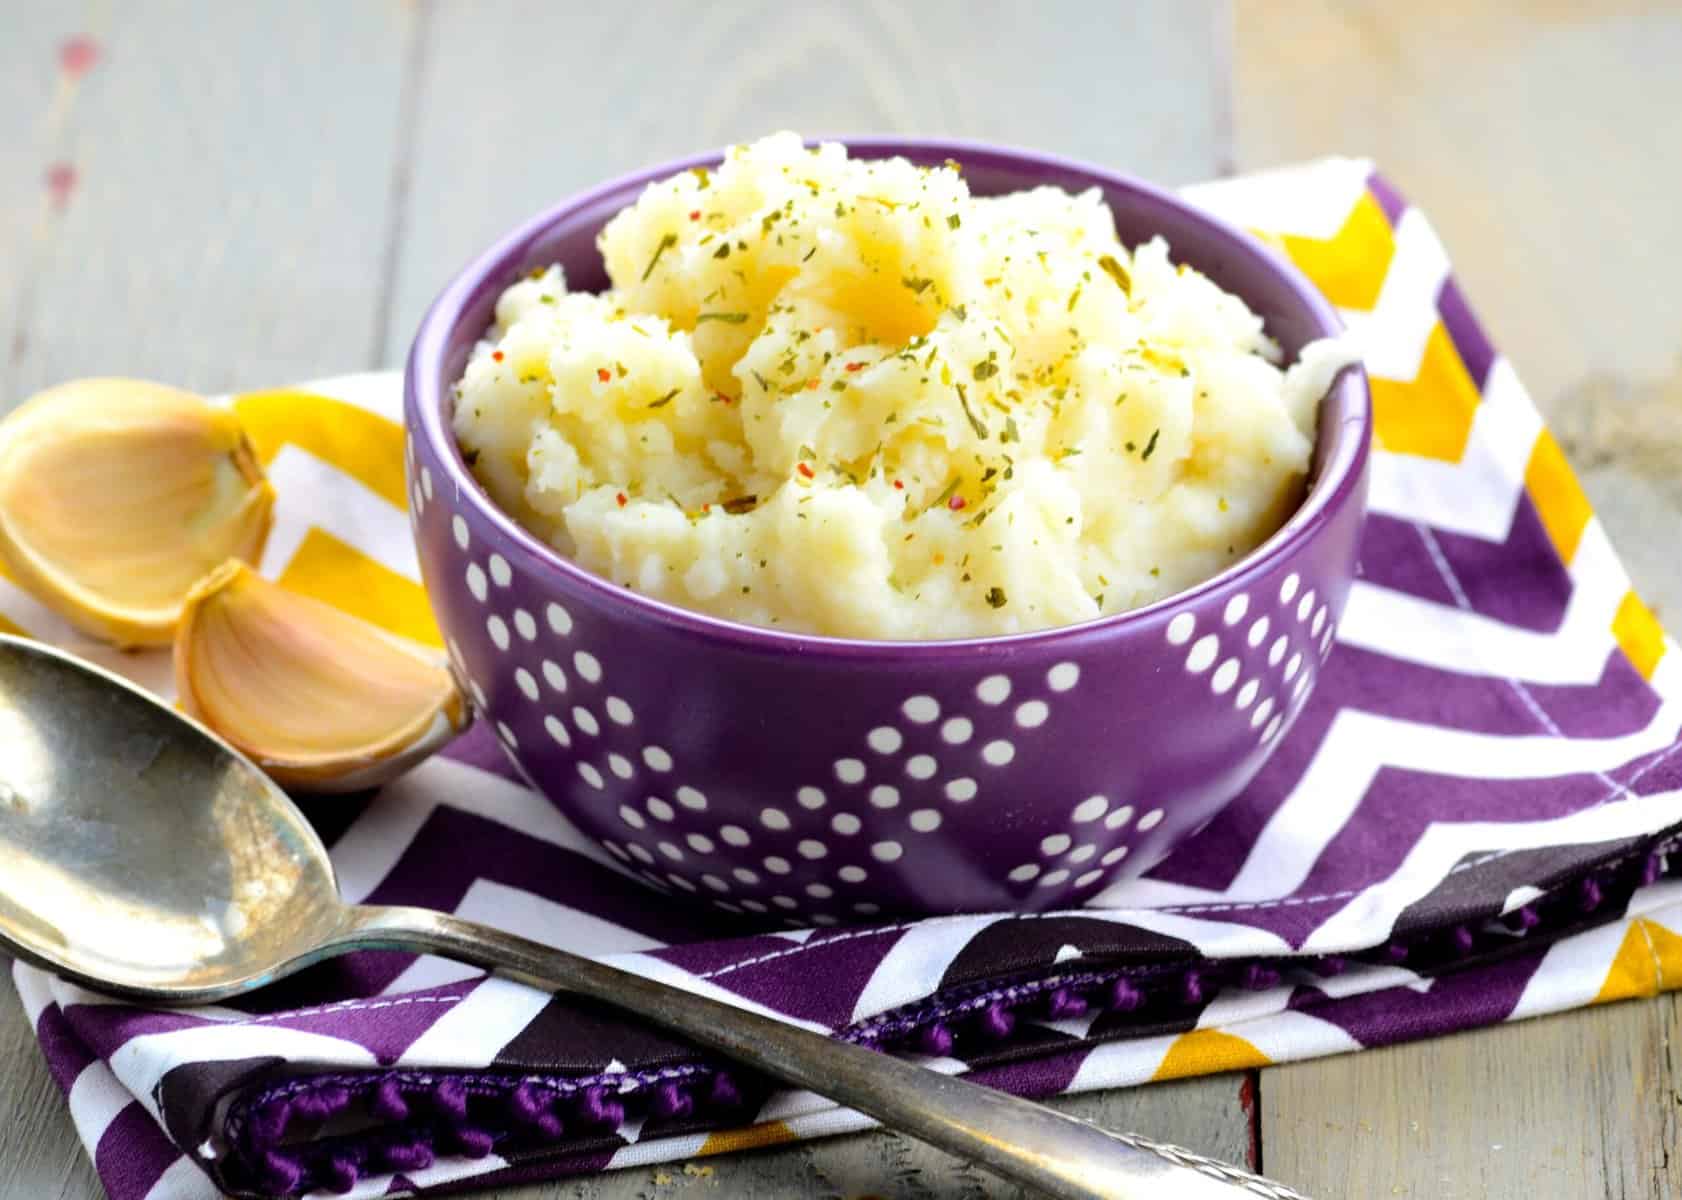  Creamy, dreamy garlic mashed potatoes